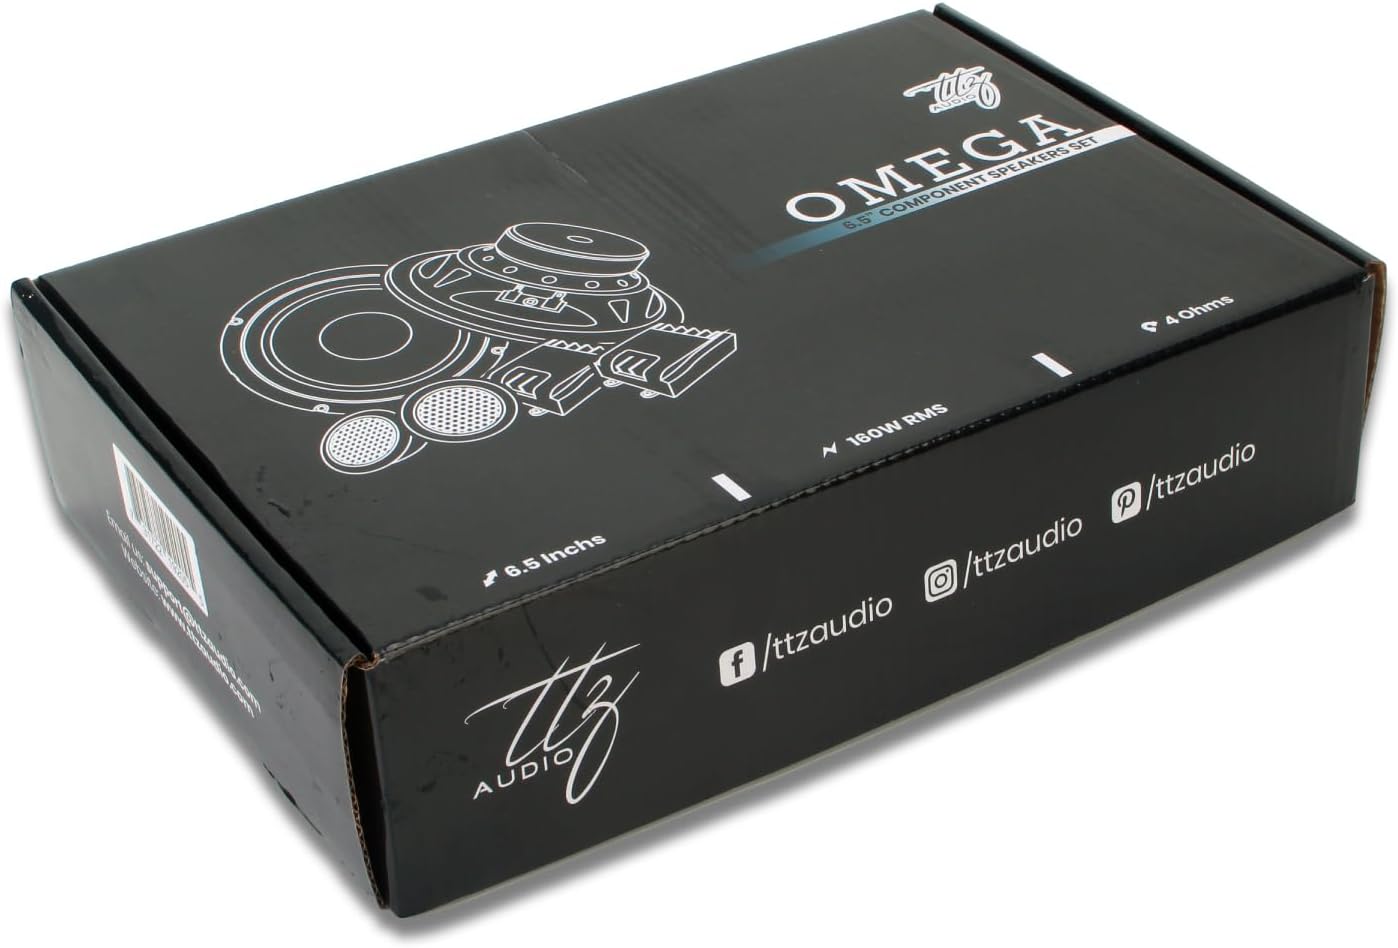 Omega 6.5" Component Speakers Set (280W)